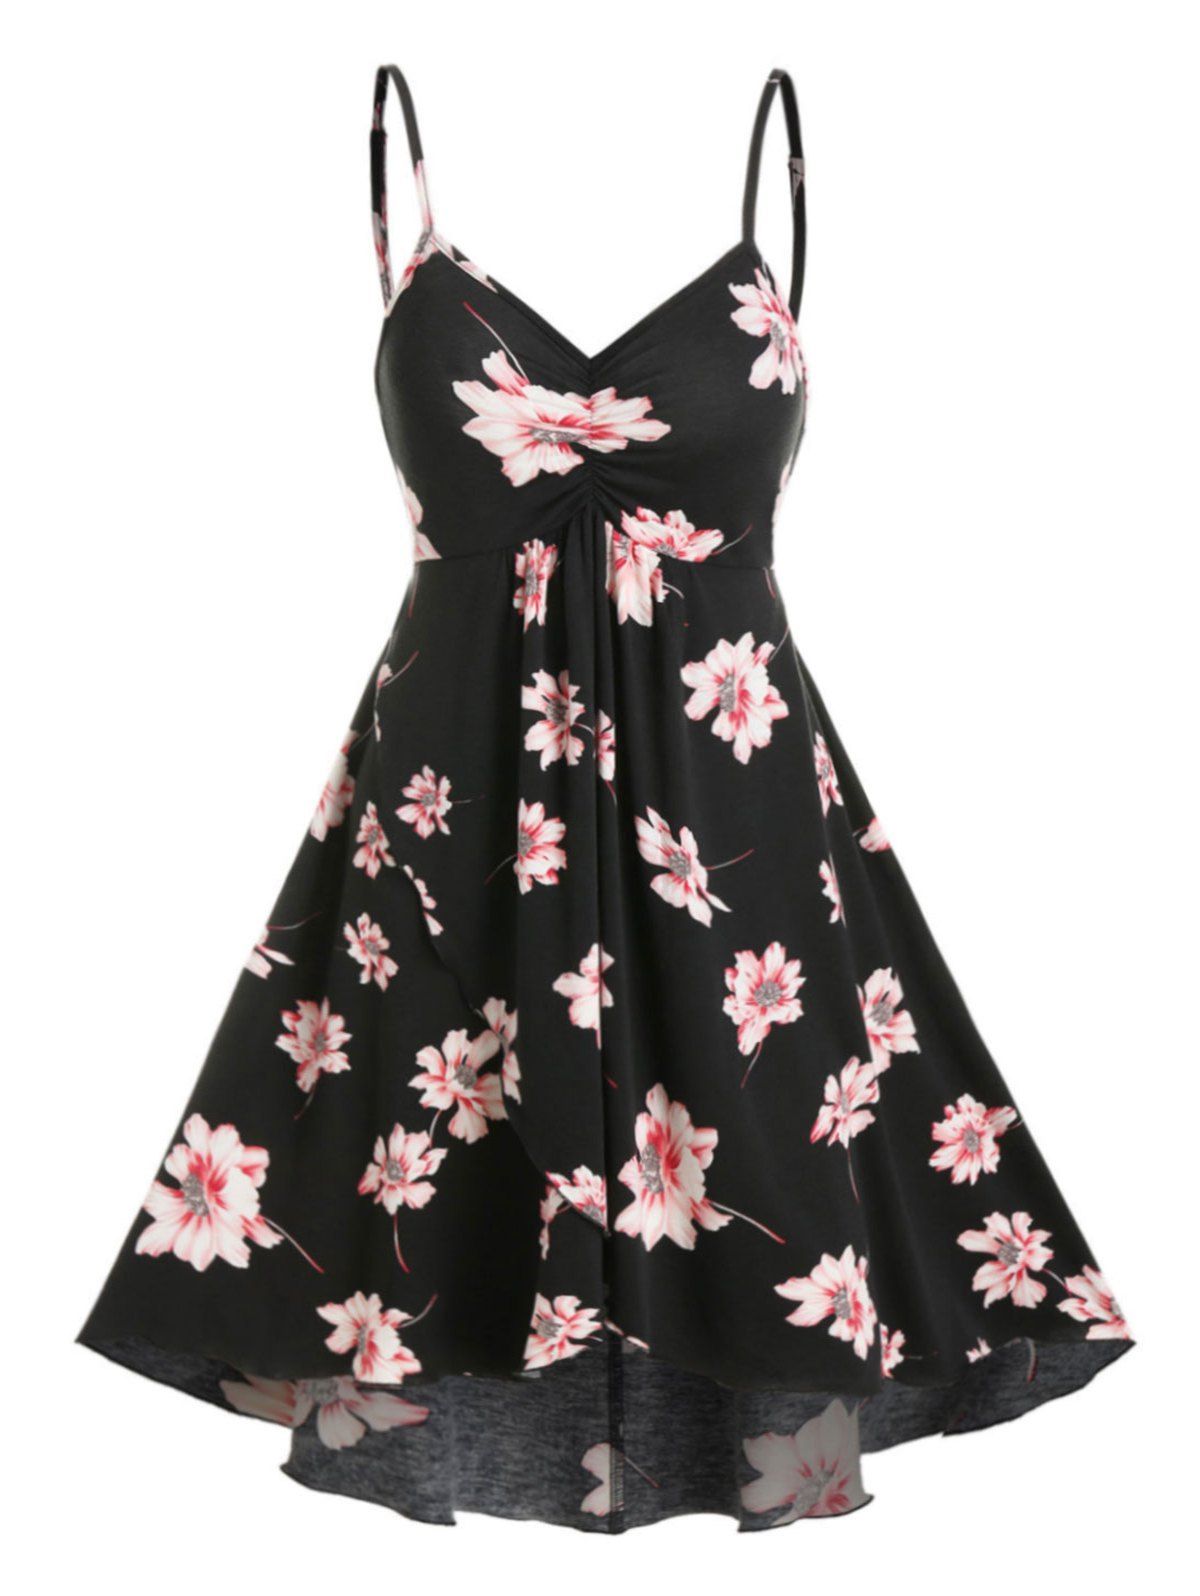 Plus Size Vacation Knee Length Cami Dress Floral Print V Neck High Waist High Low Summer Dress - BLACK 2X